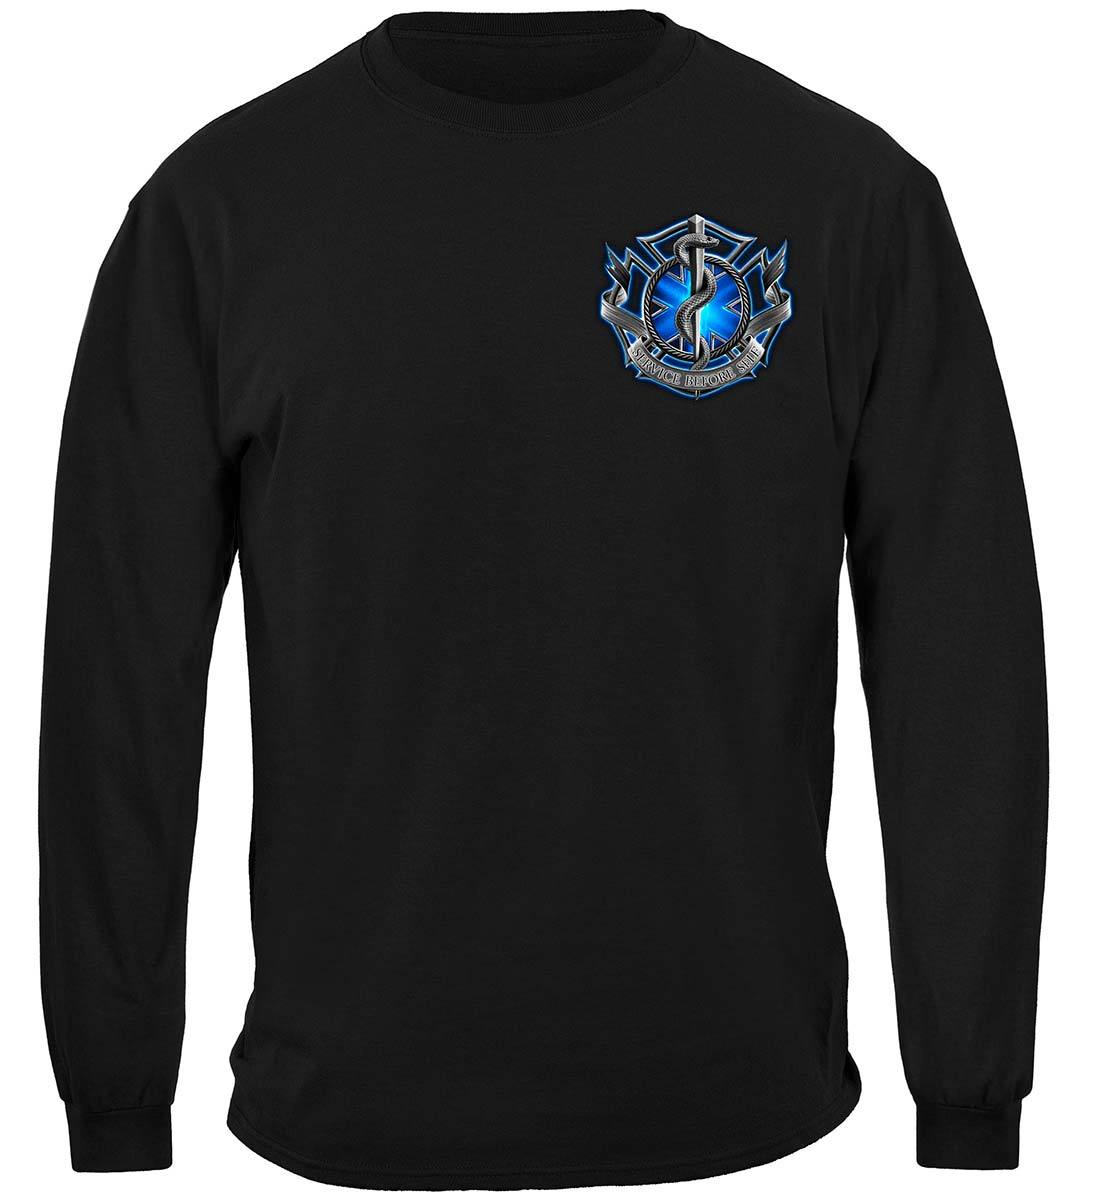 Fire Rescue Premium Hooded Sweat Shirt